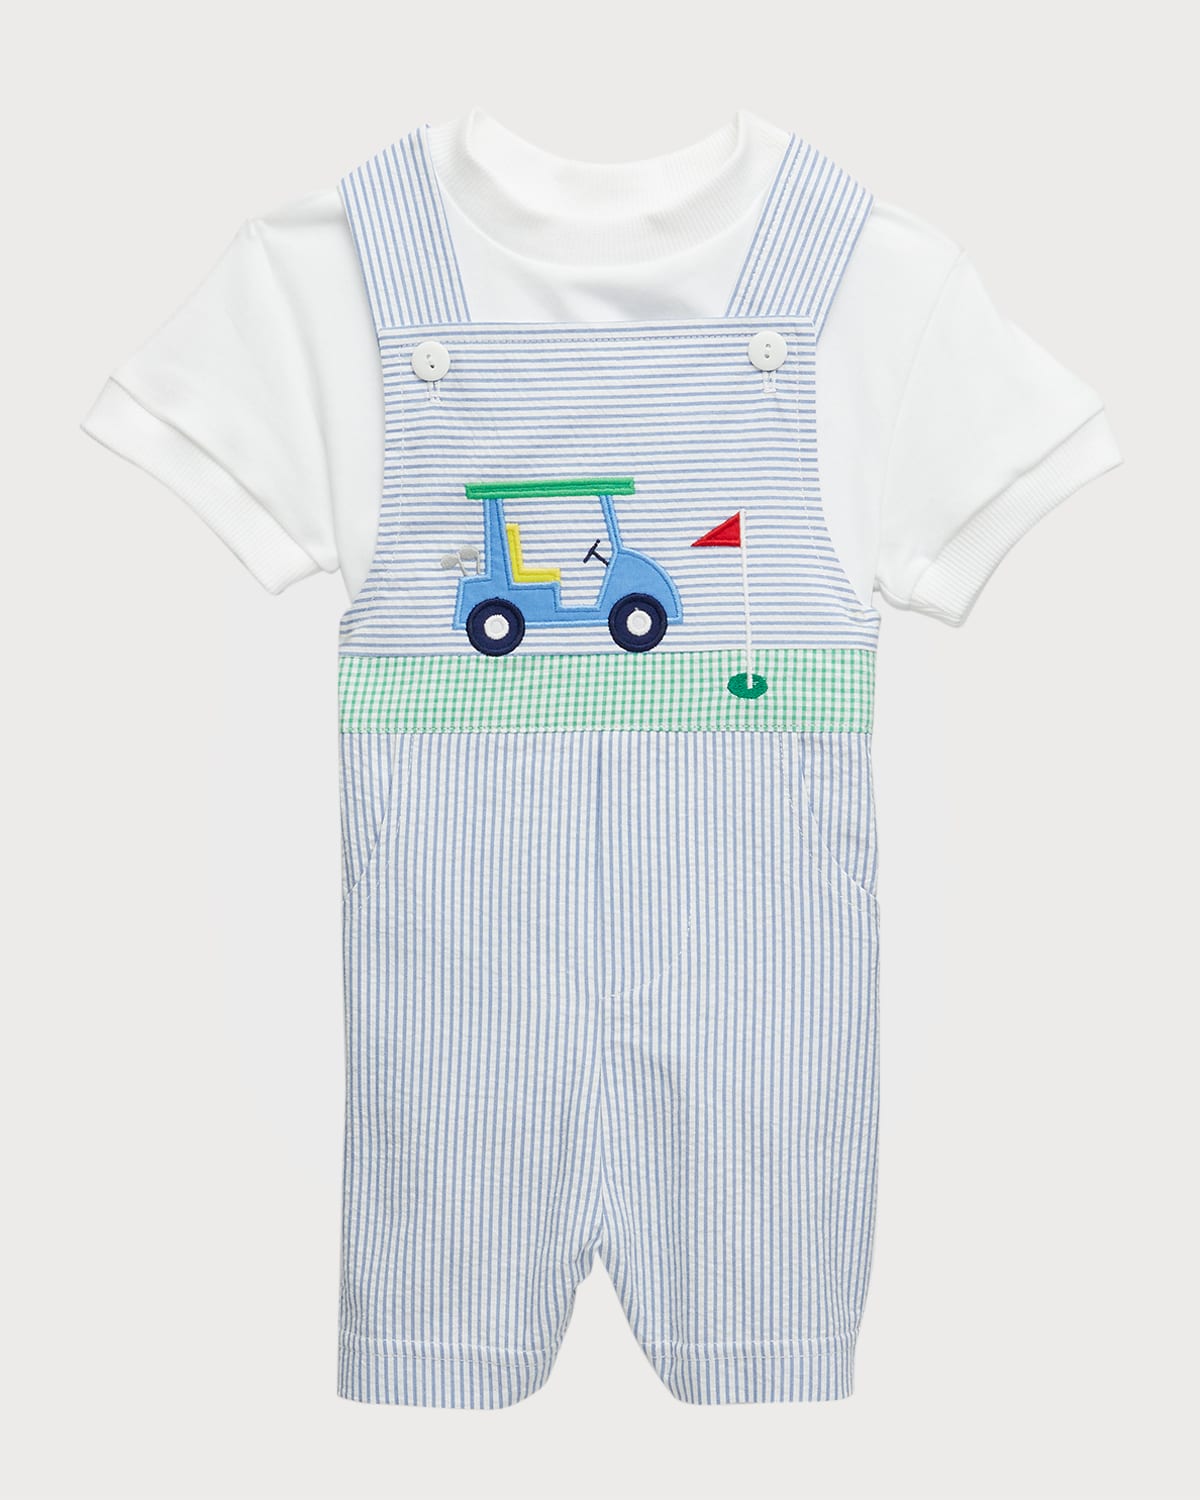 Boy's Embroidered Golf Cart Seersucker W/ T-Shirt, Size 6M-24M